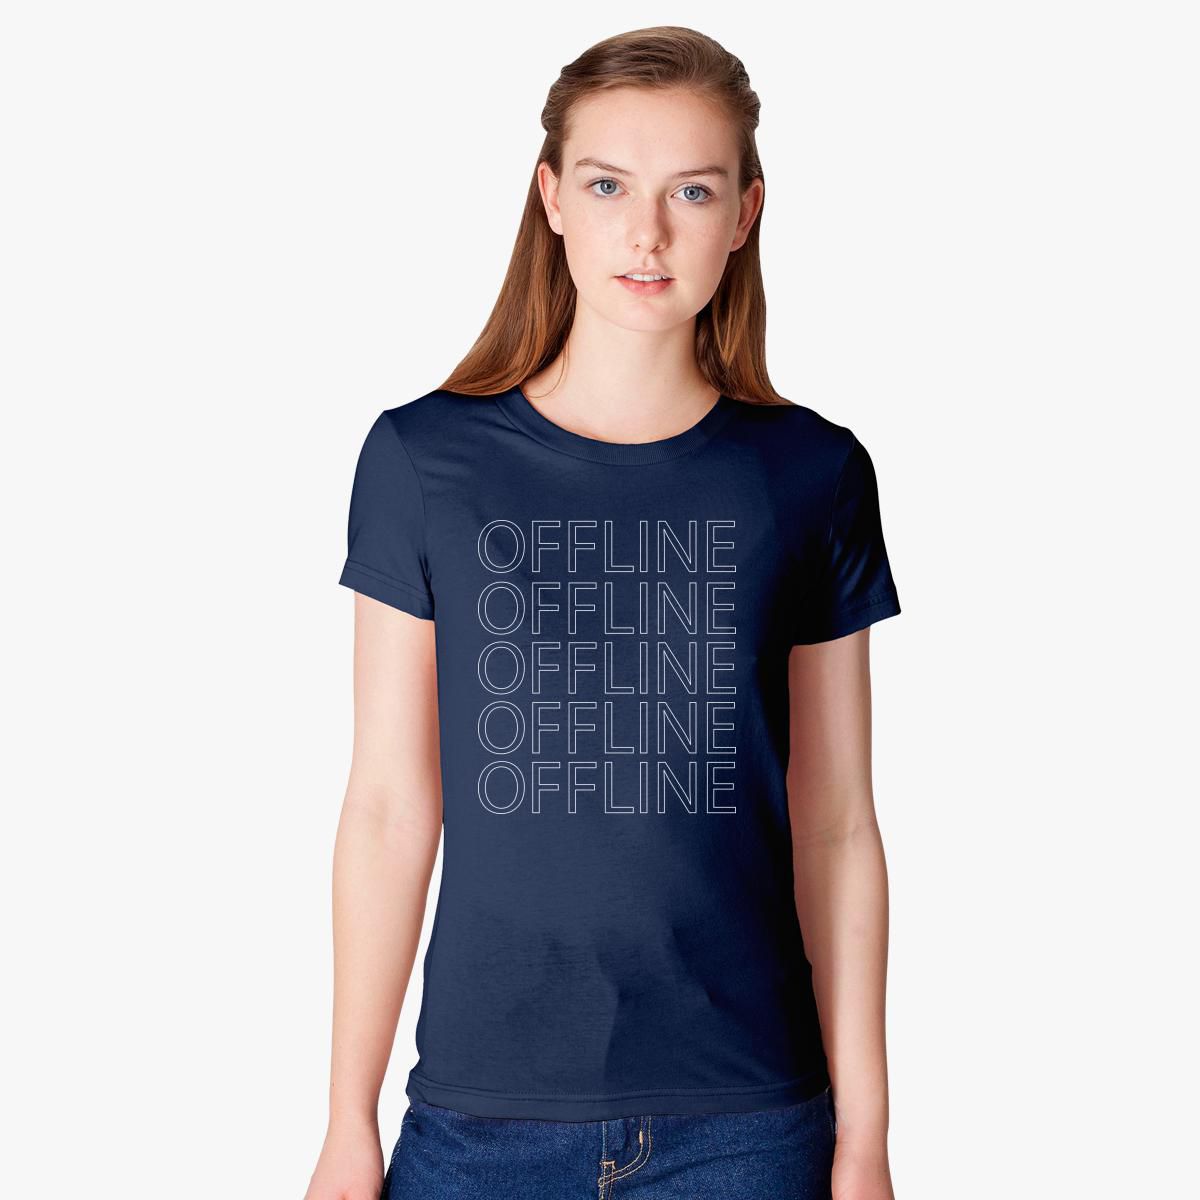  offline  Women s T  shirt  Customon